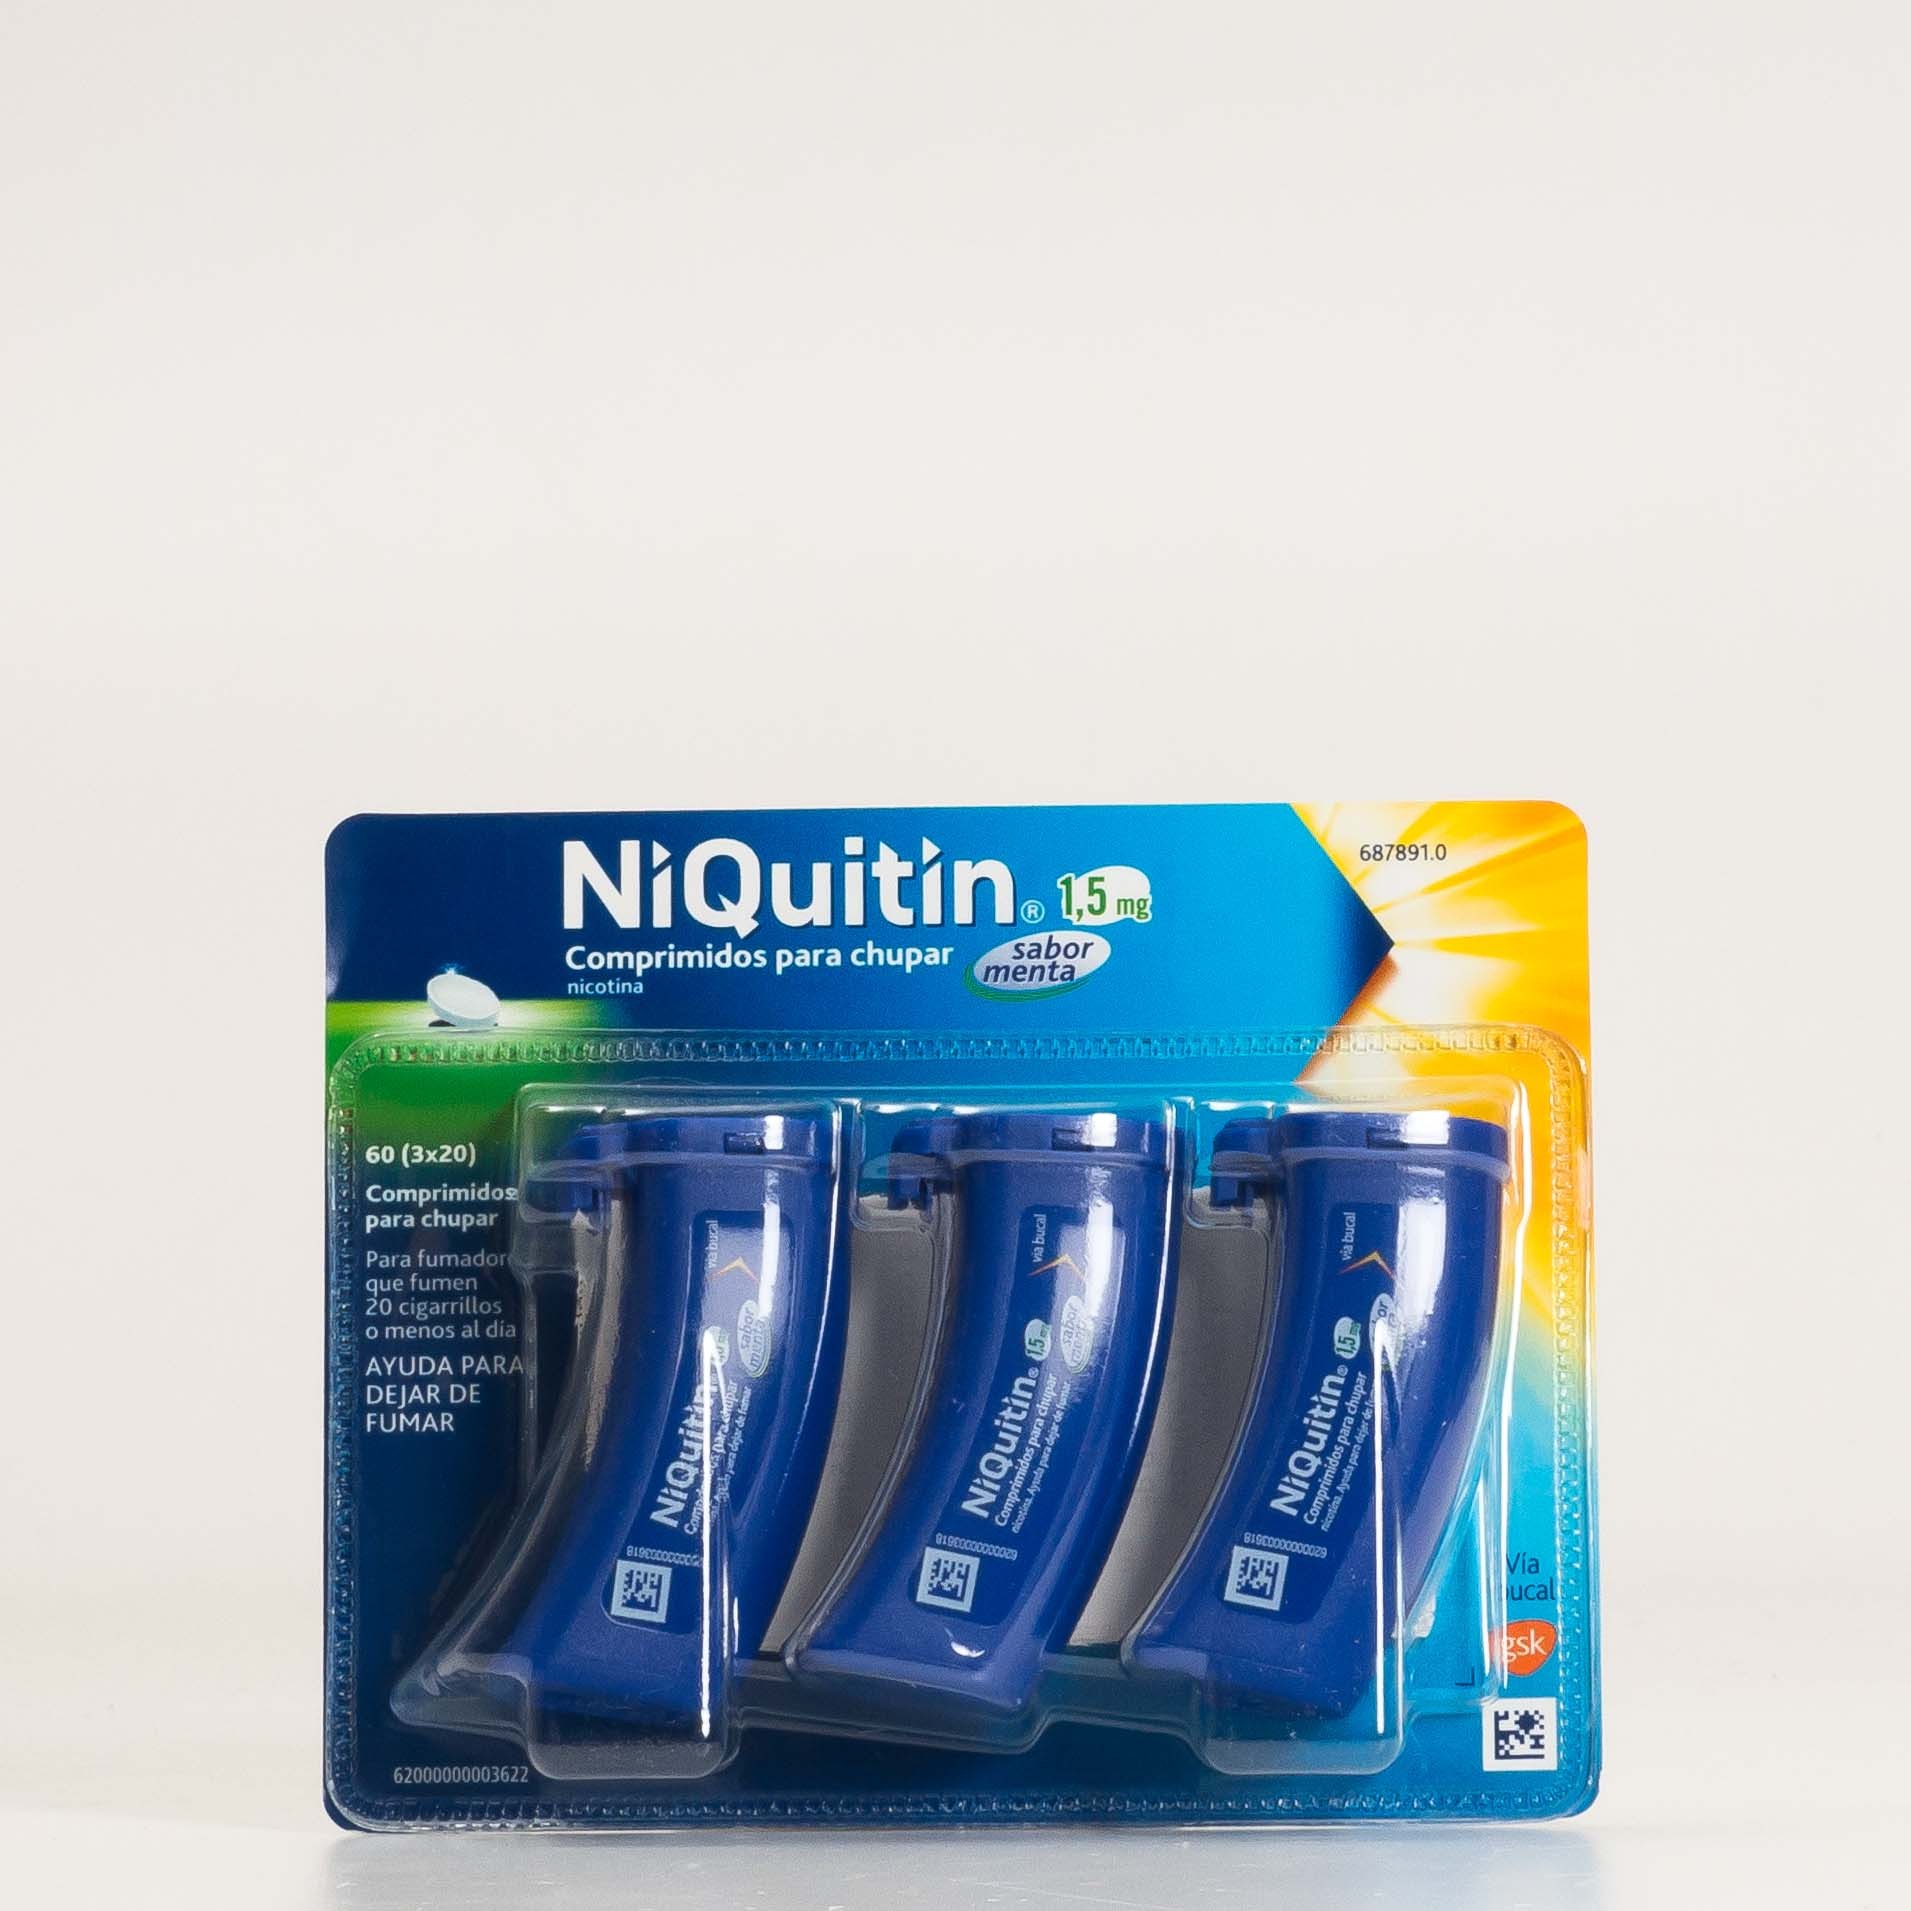 Niquitin 1.5 mg 60 Comprimidos para chupar